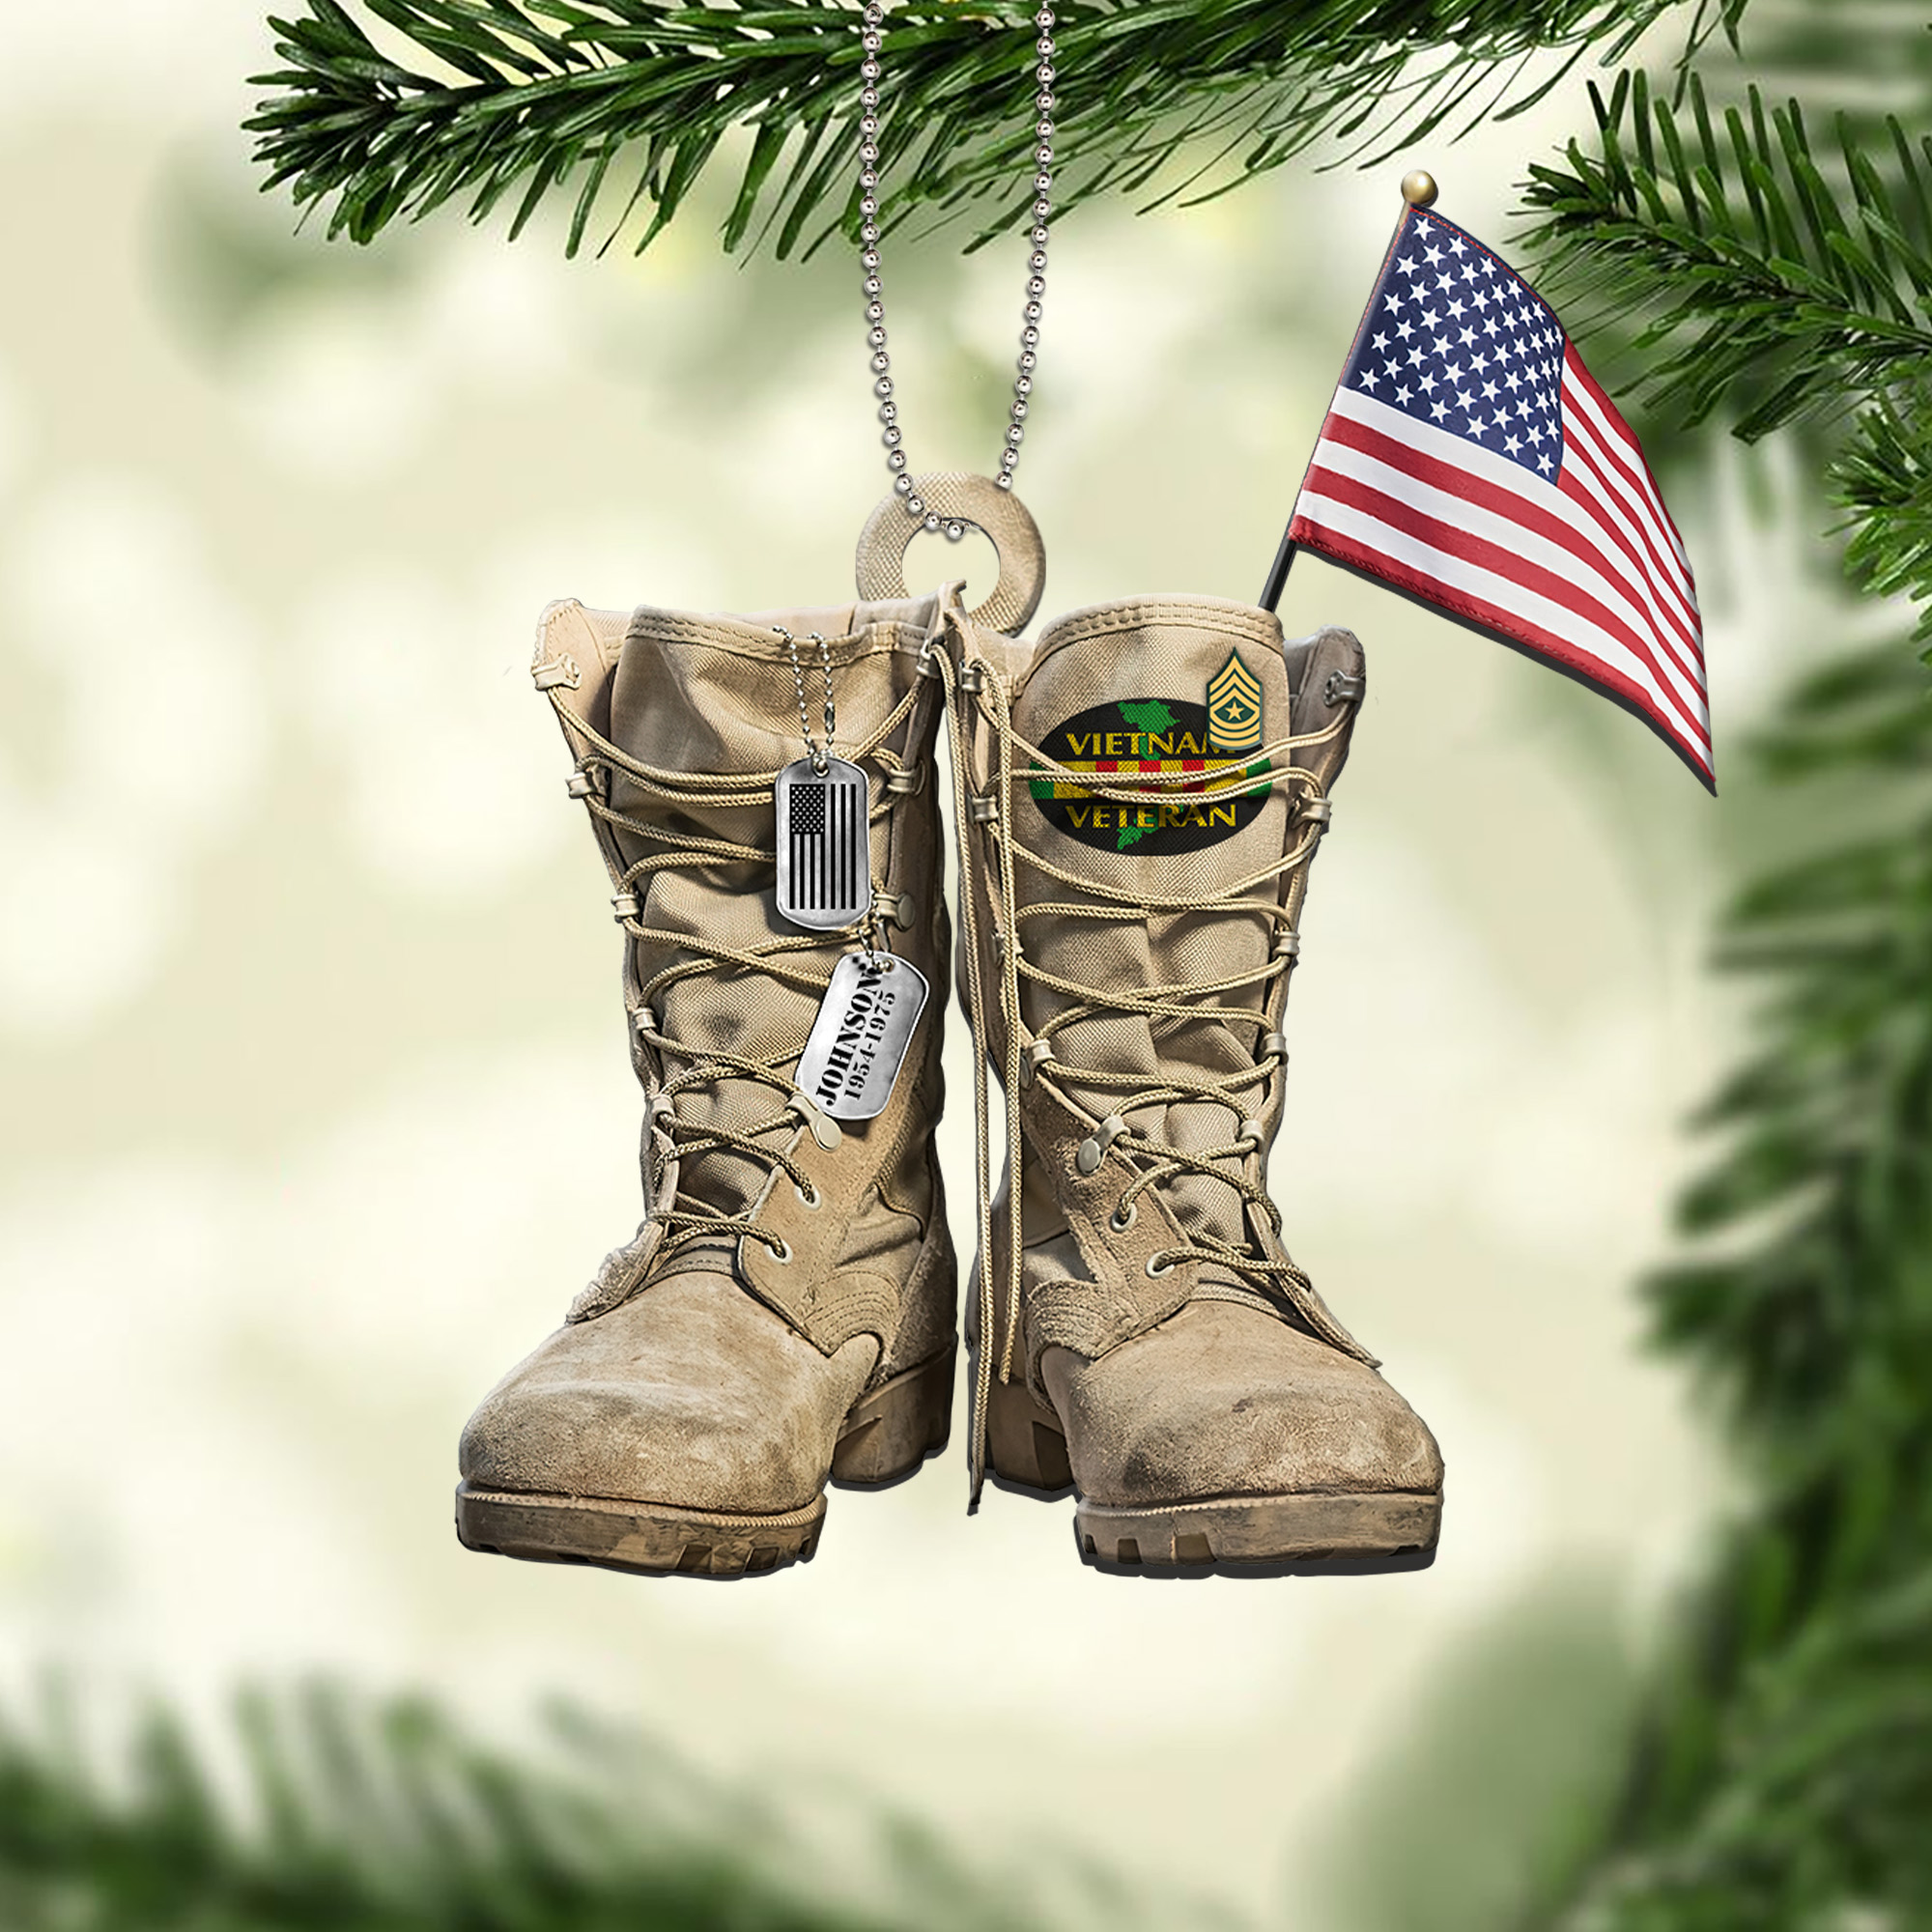 VIETNAM_VETERAN_Military_Boots_Personalized_Custom_Christmas_Ornament_1